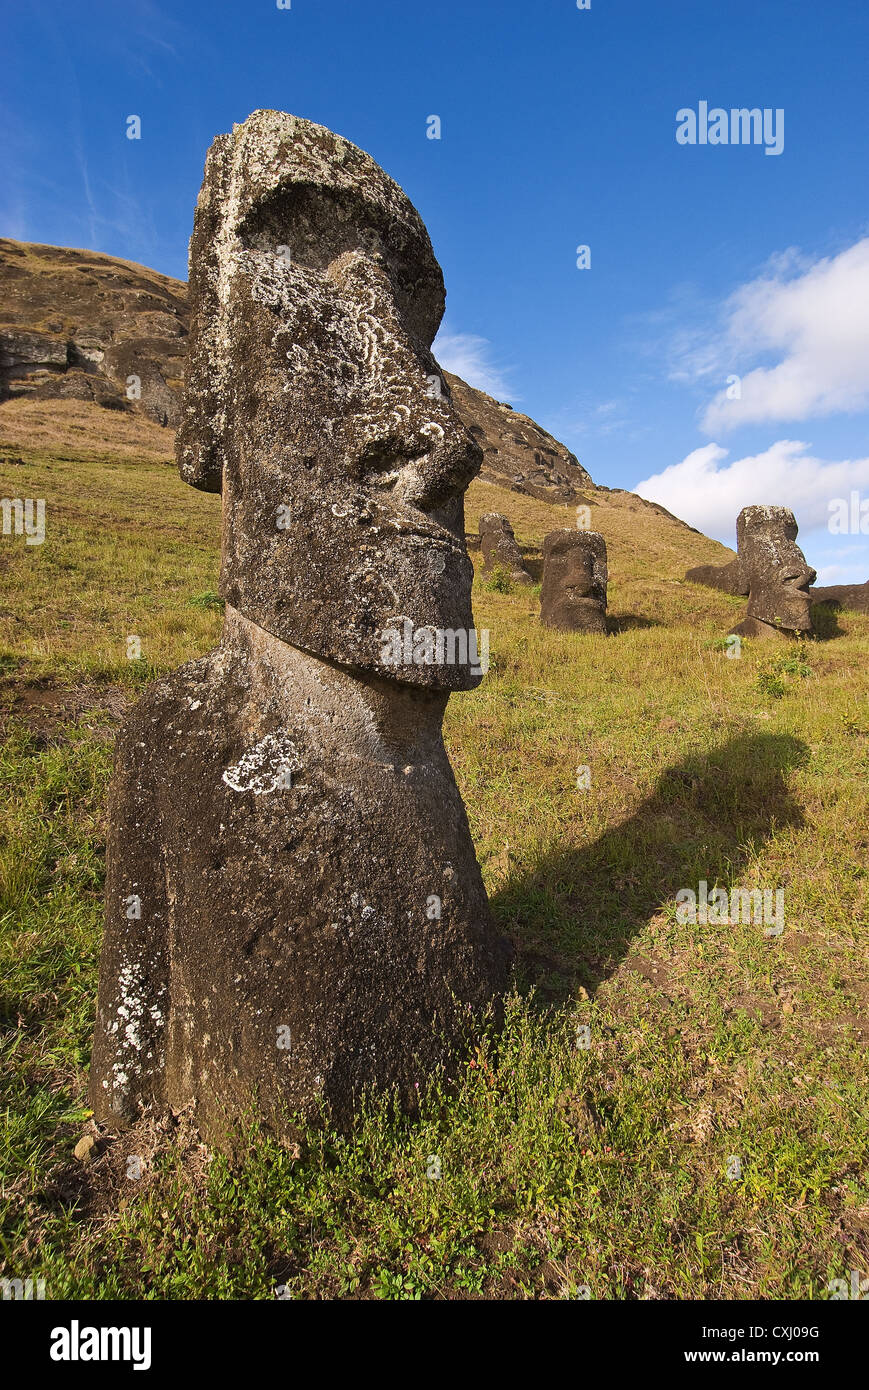 Elk198-5269v Cile, Isola di Pasqua, Rano Raraku, moai statue Foto Stock